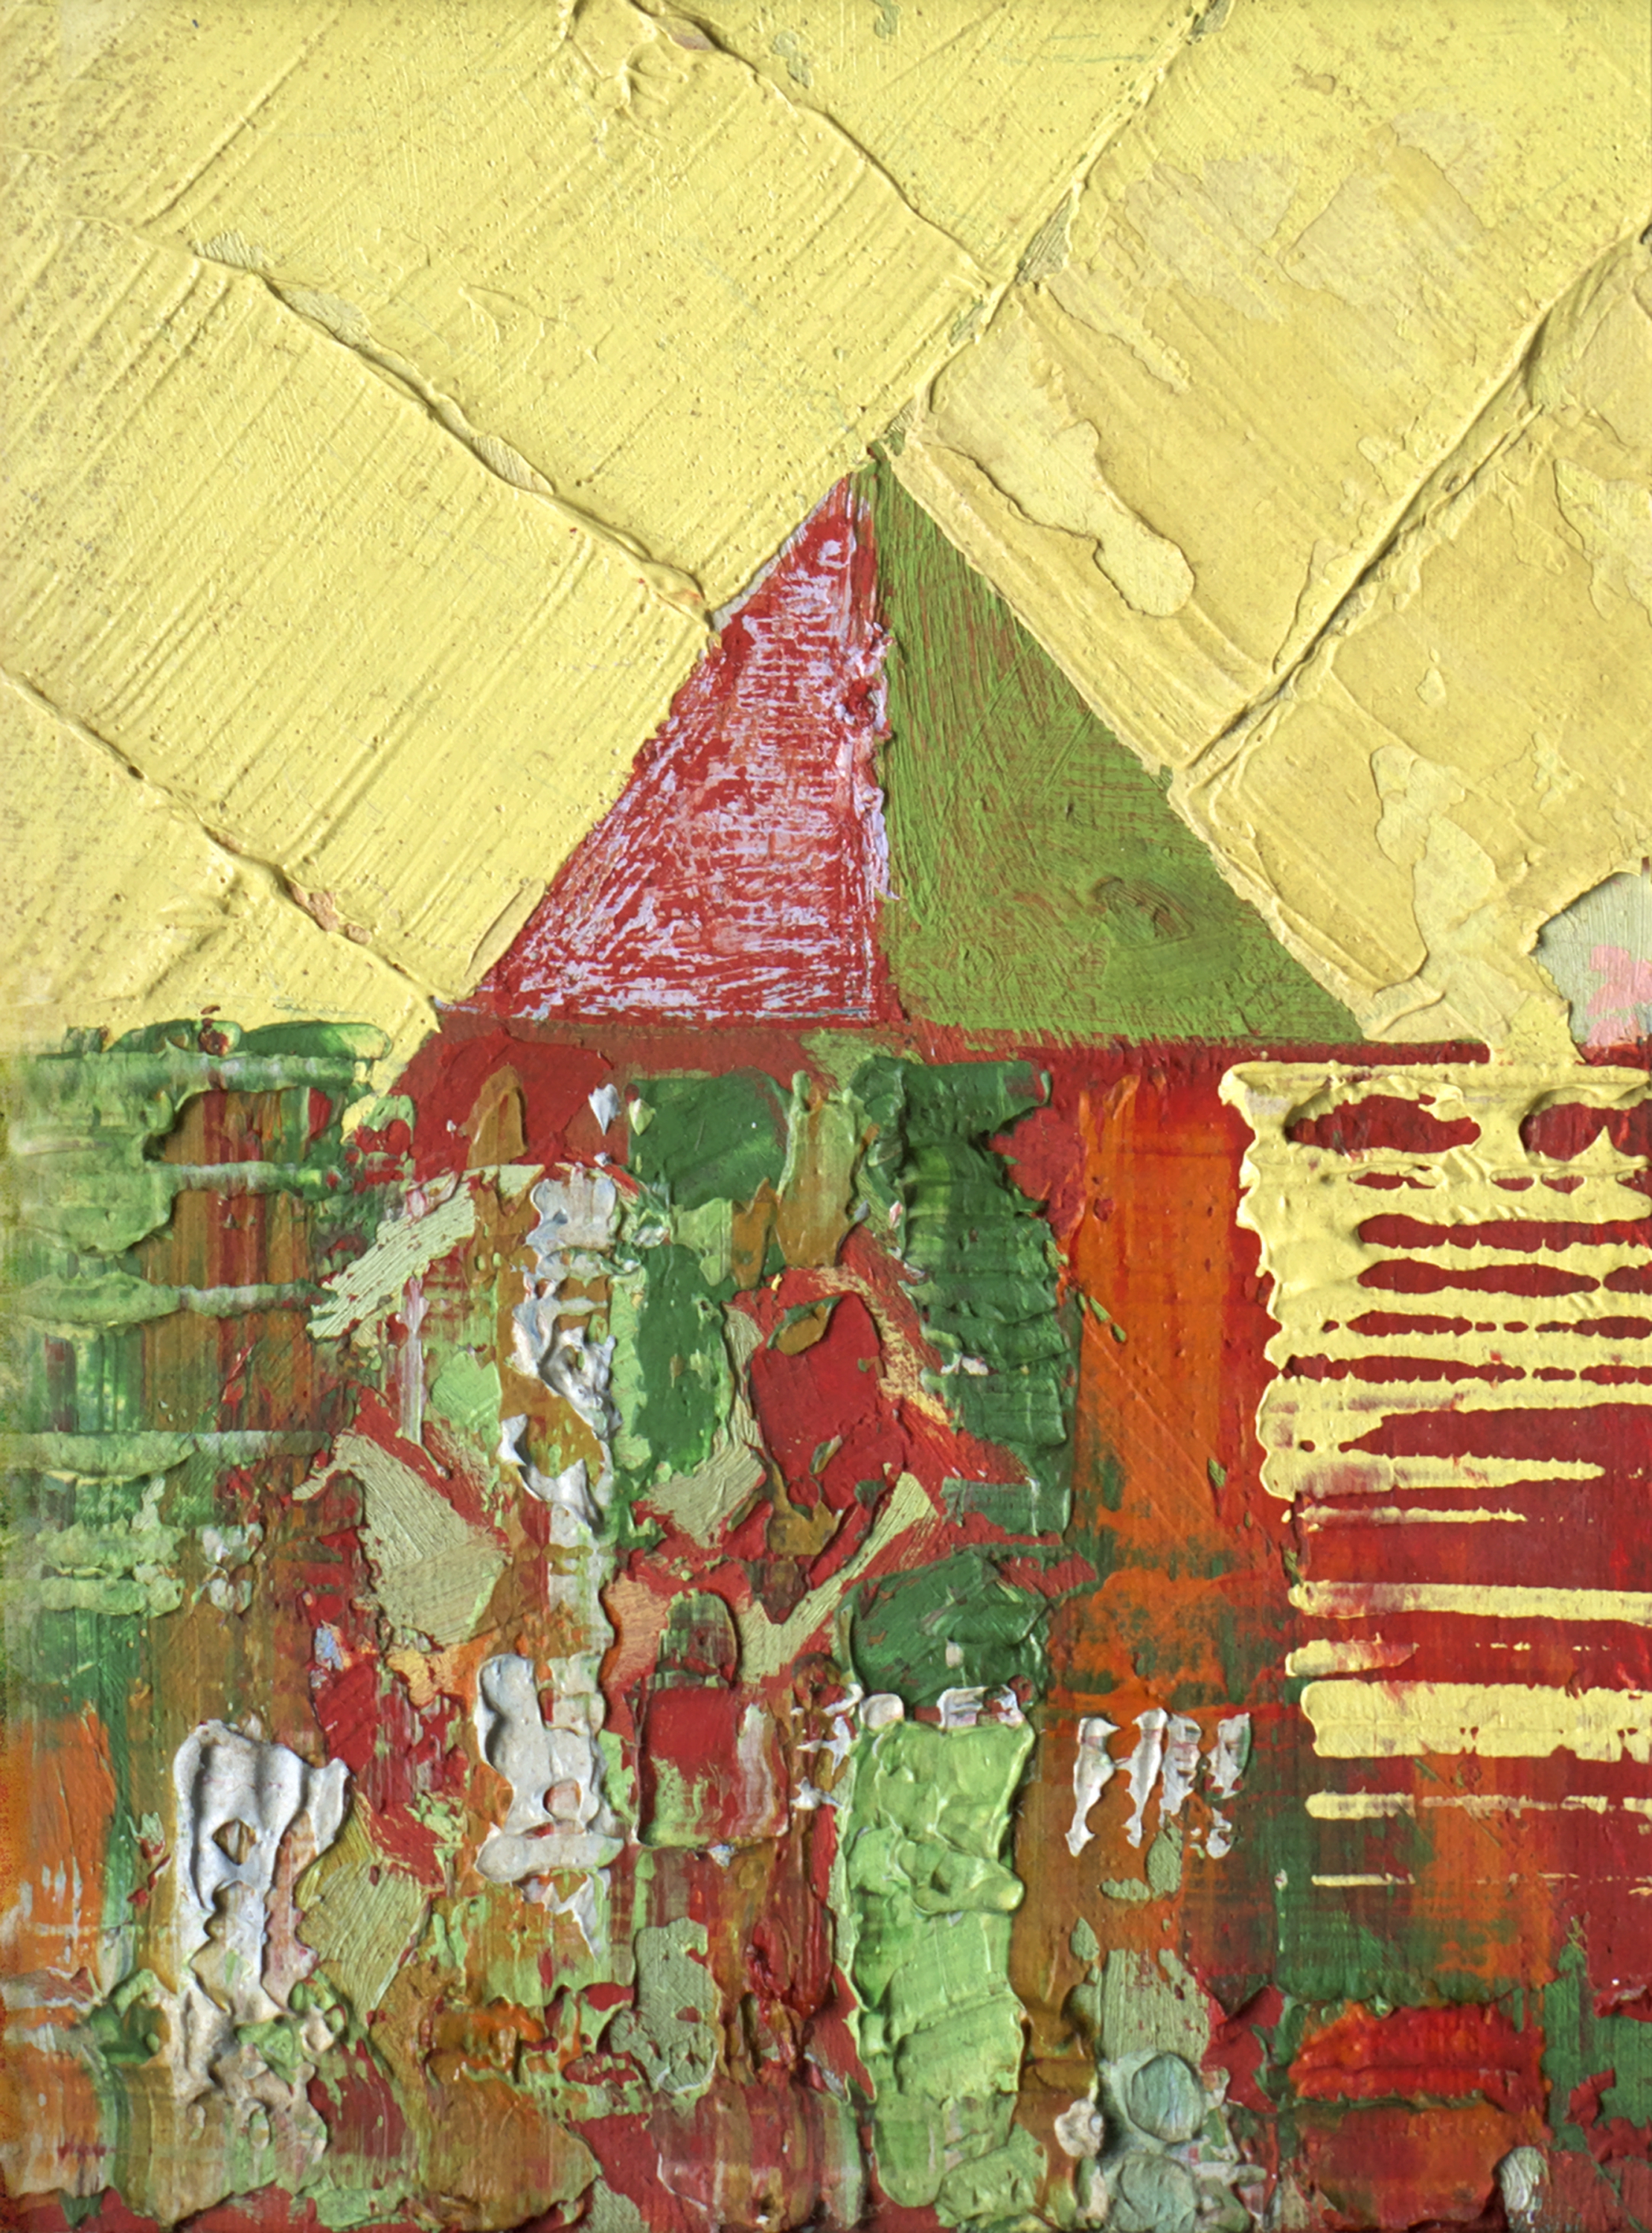 Lost Pyramid, 2006